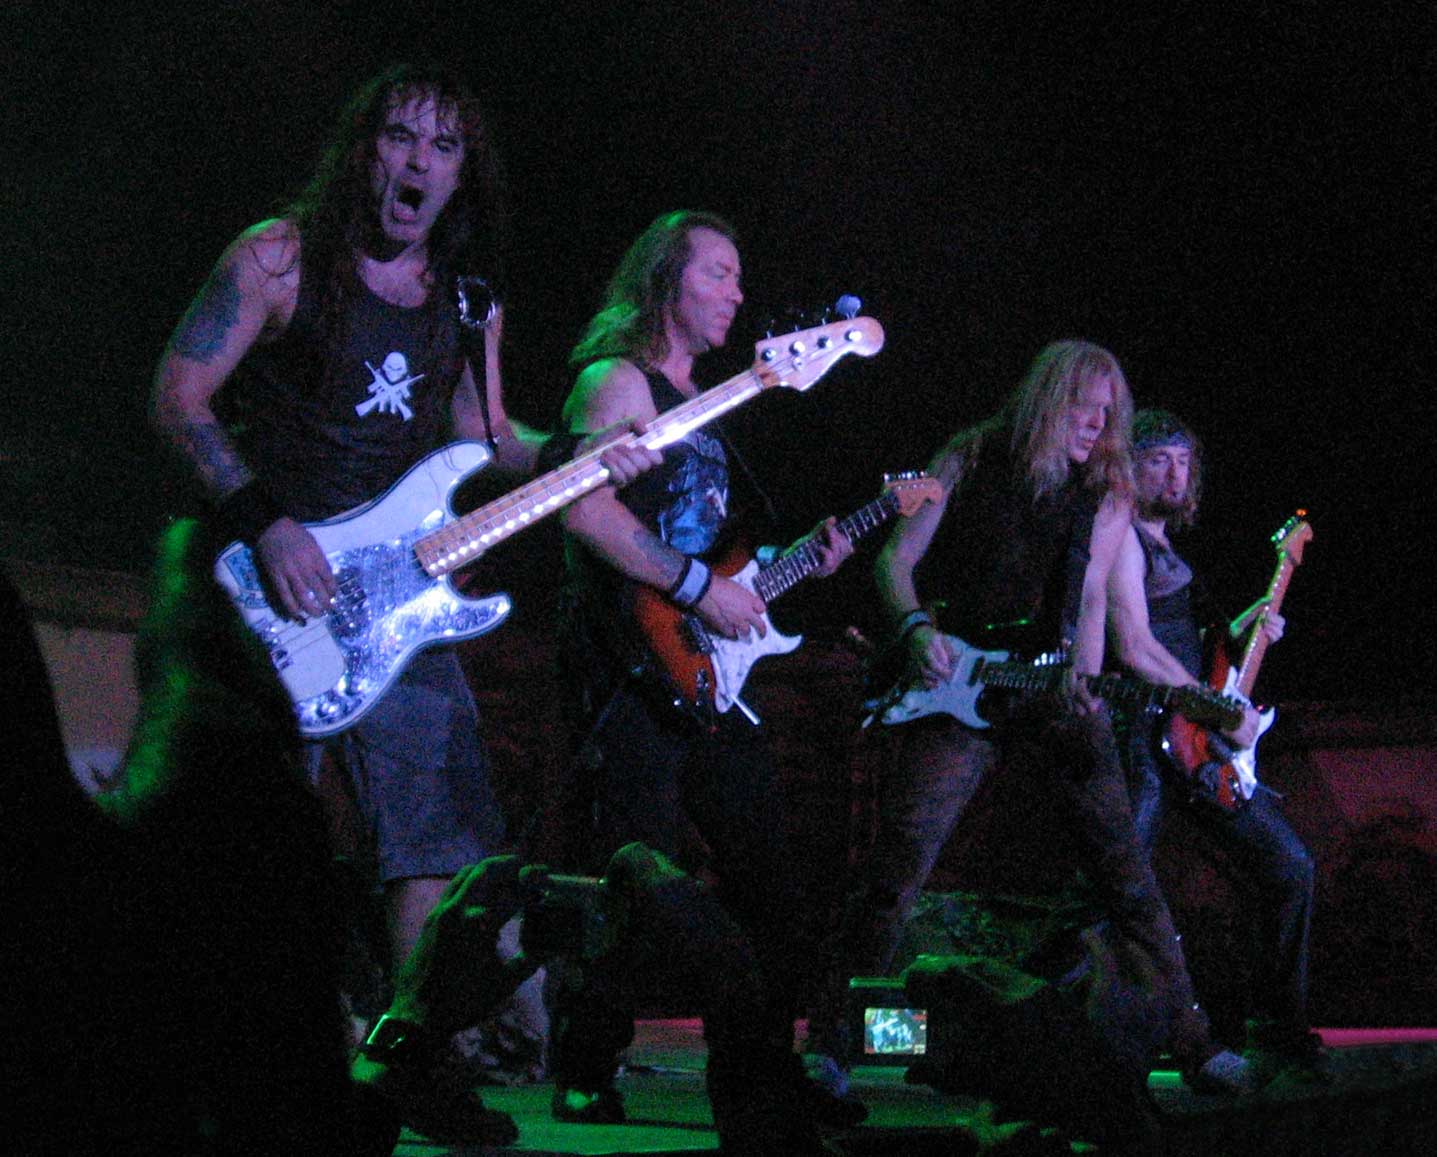 Iron_Maiden_-_bass_and_guitars_30nov2006.jpg